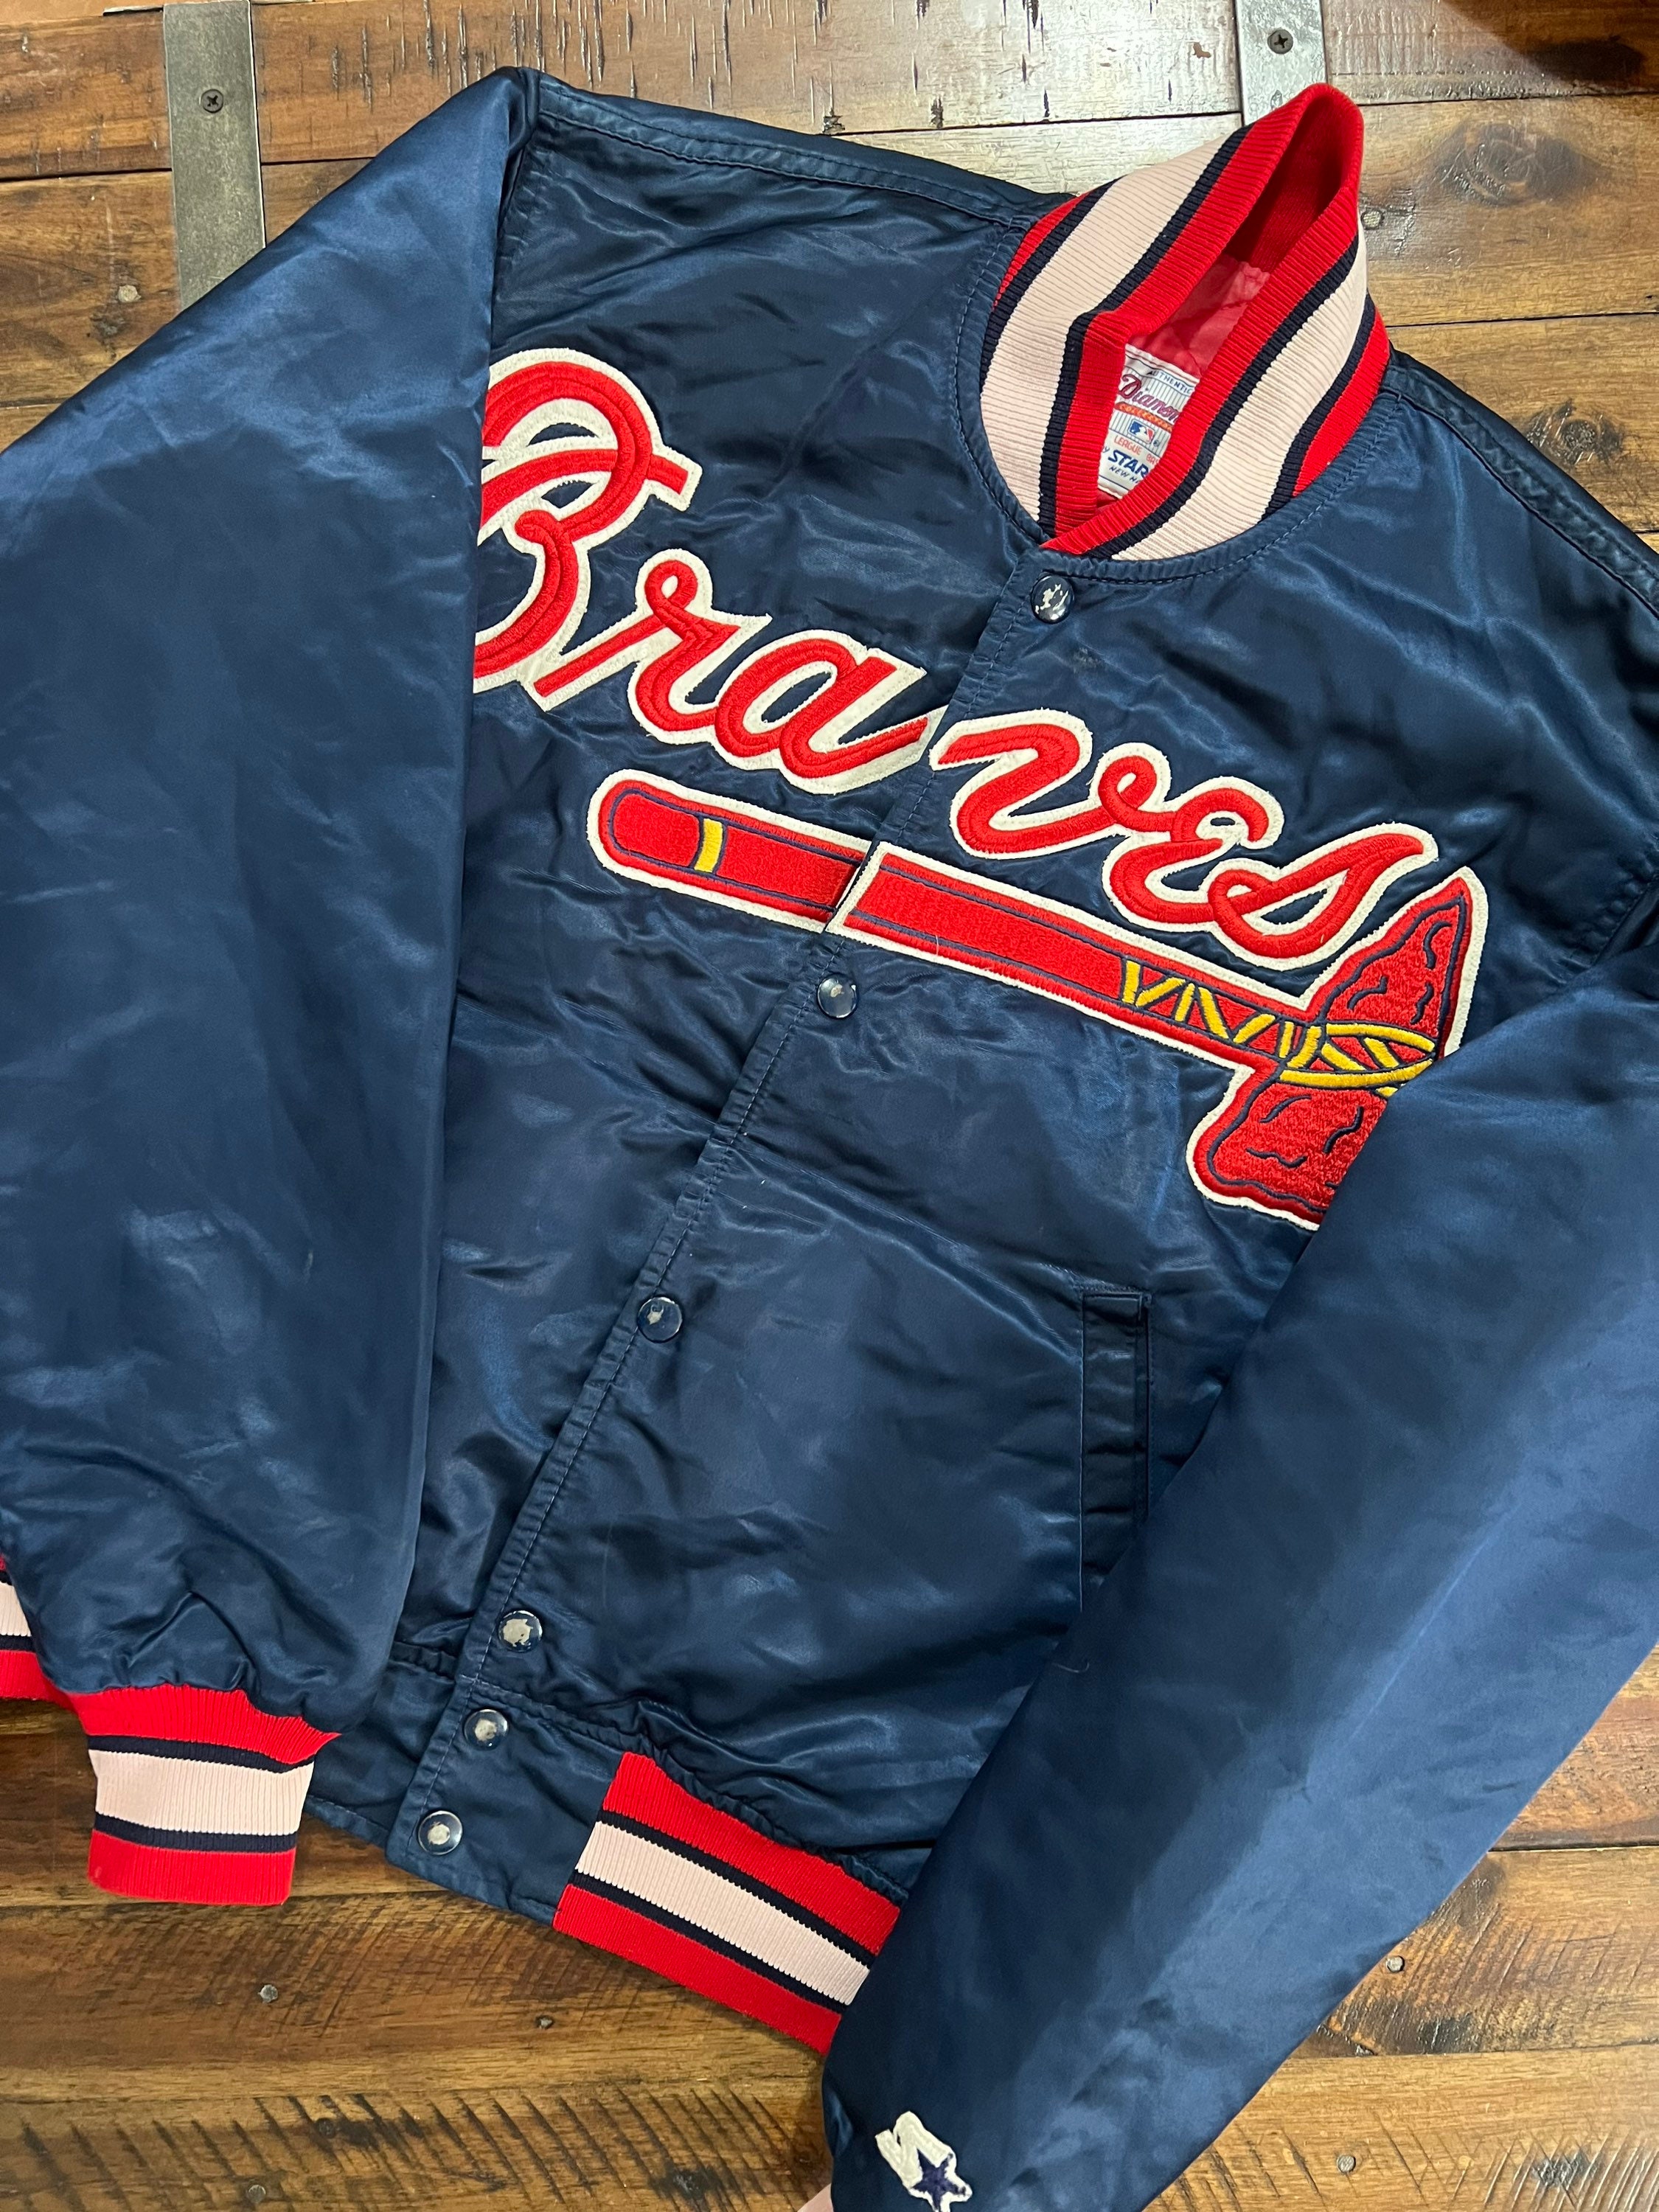 Vintage 90s Atlanta Braves Starter Bomber Jacket 